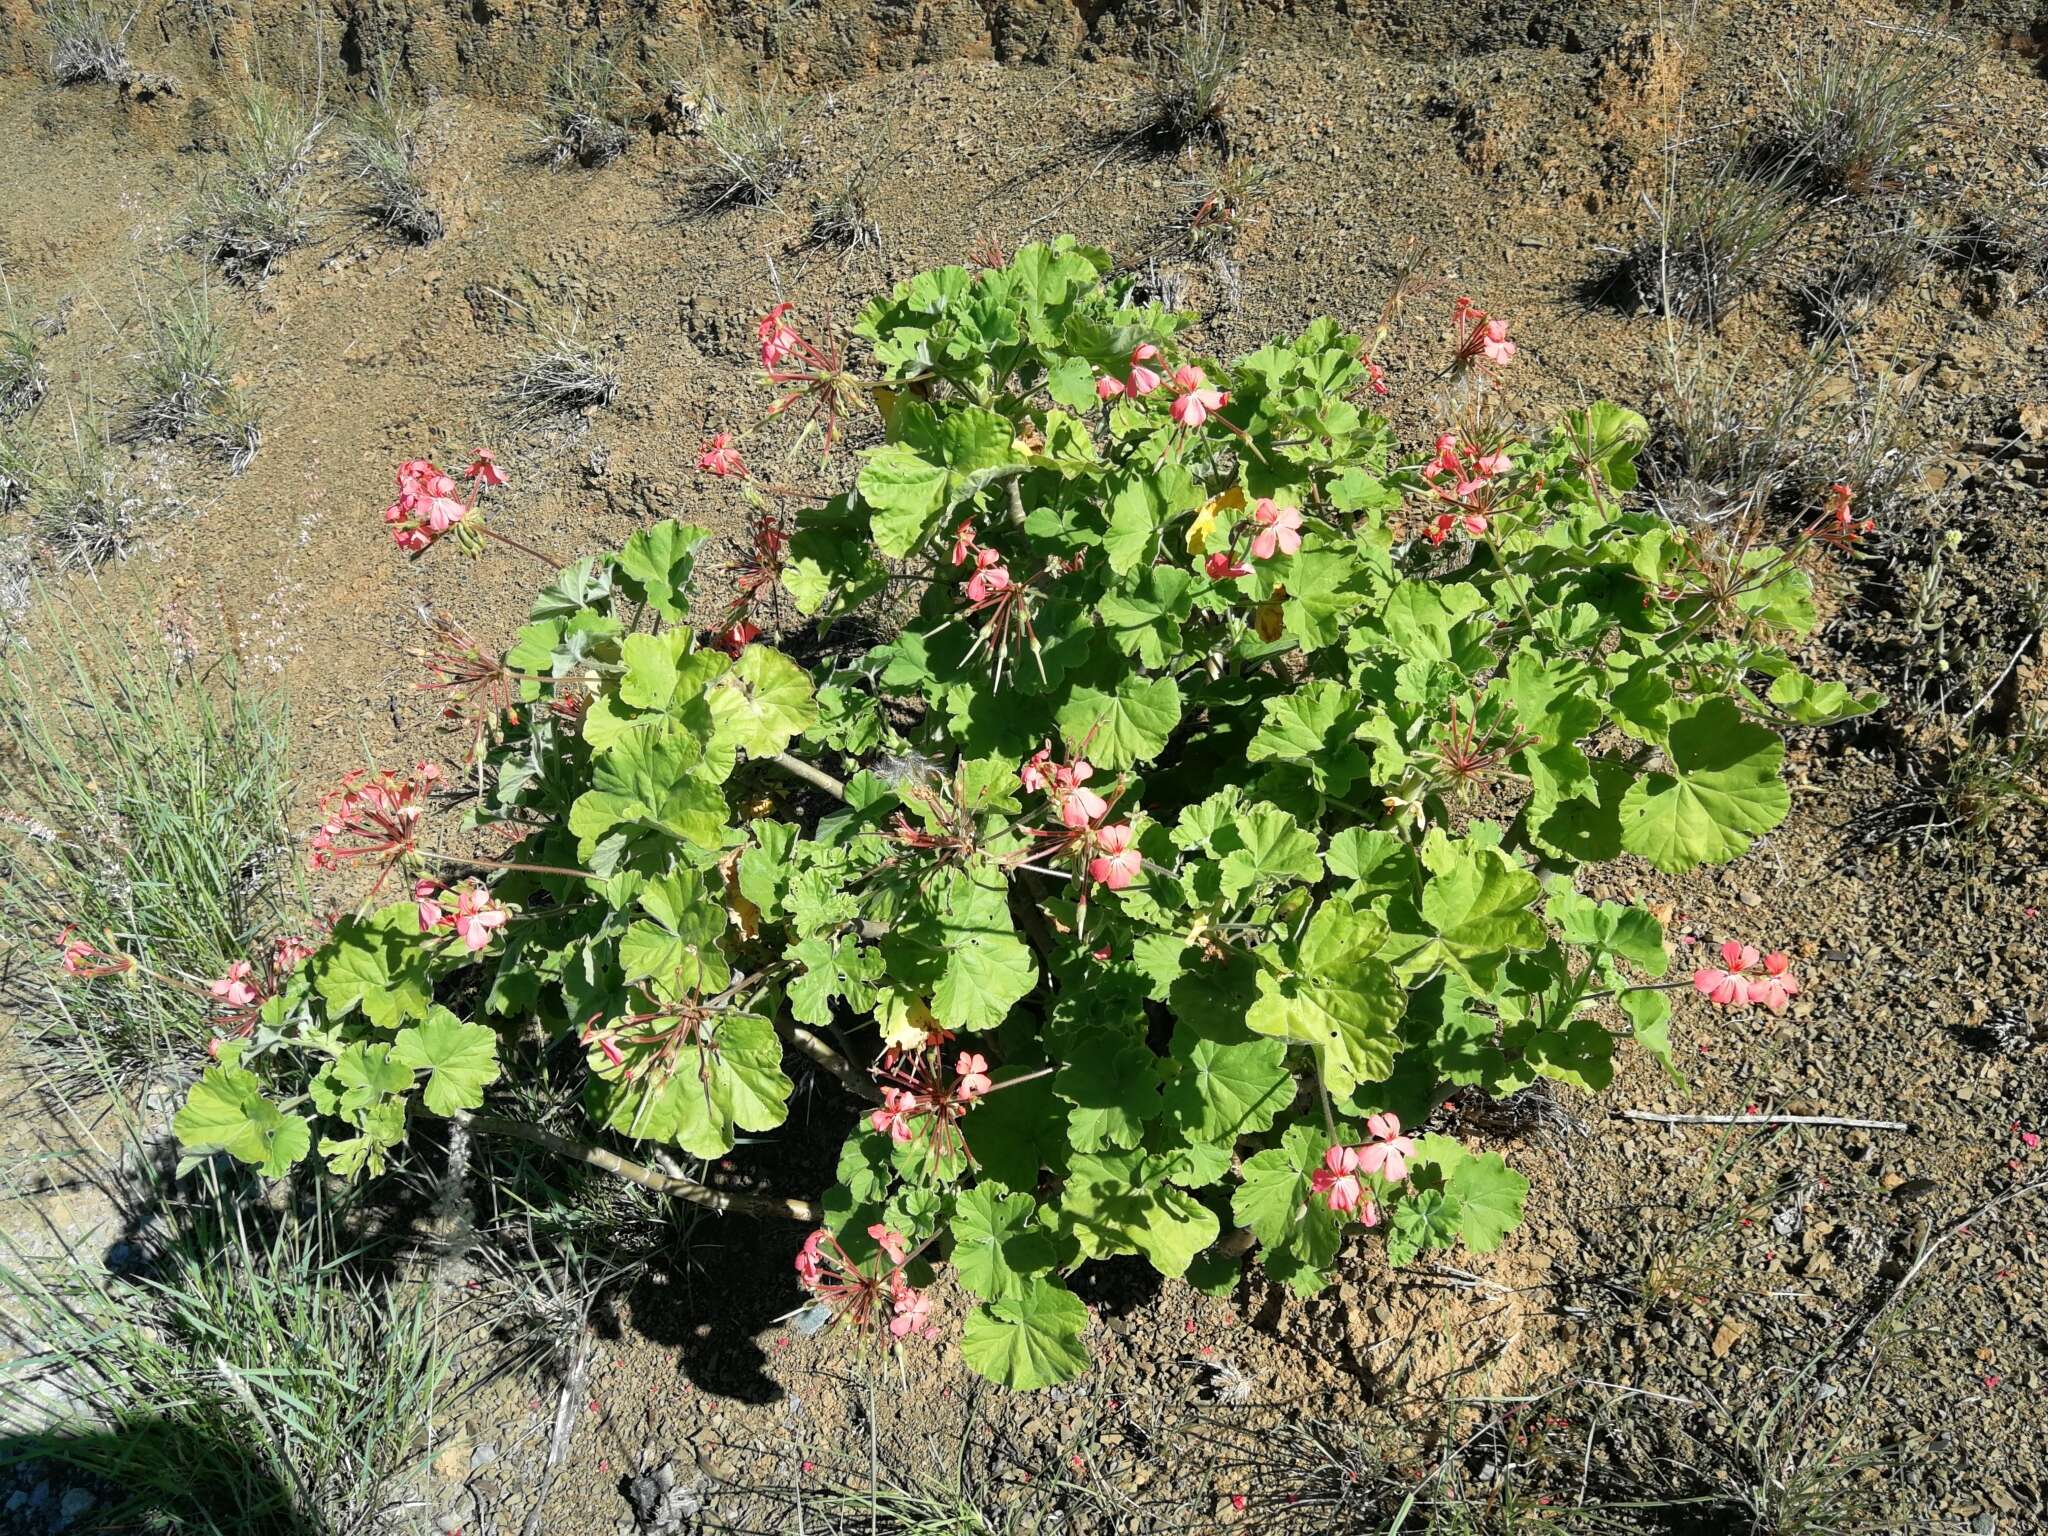 Image of scarlet geranium